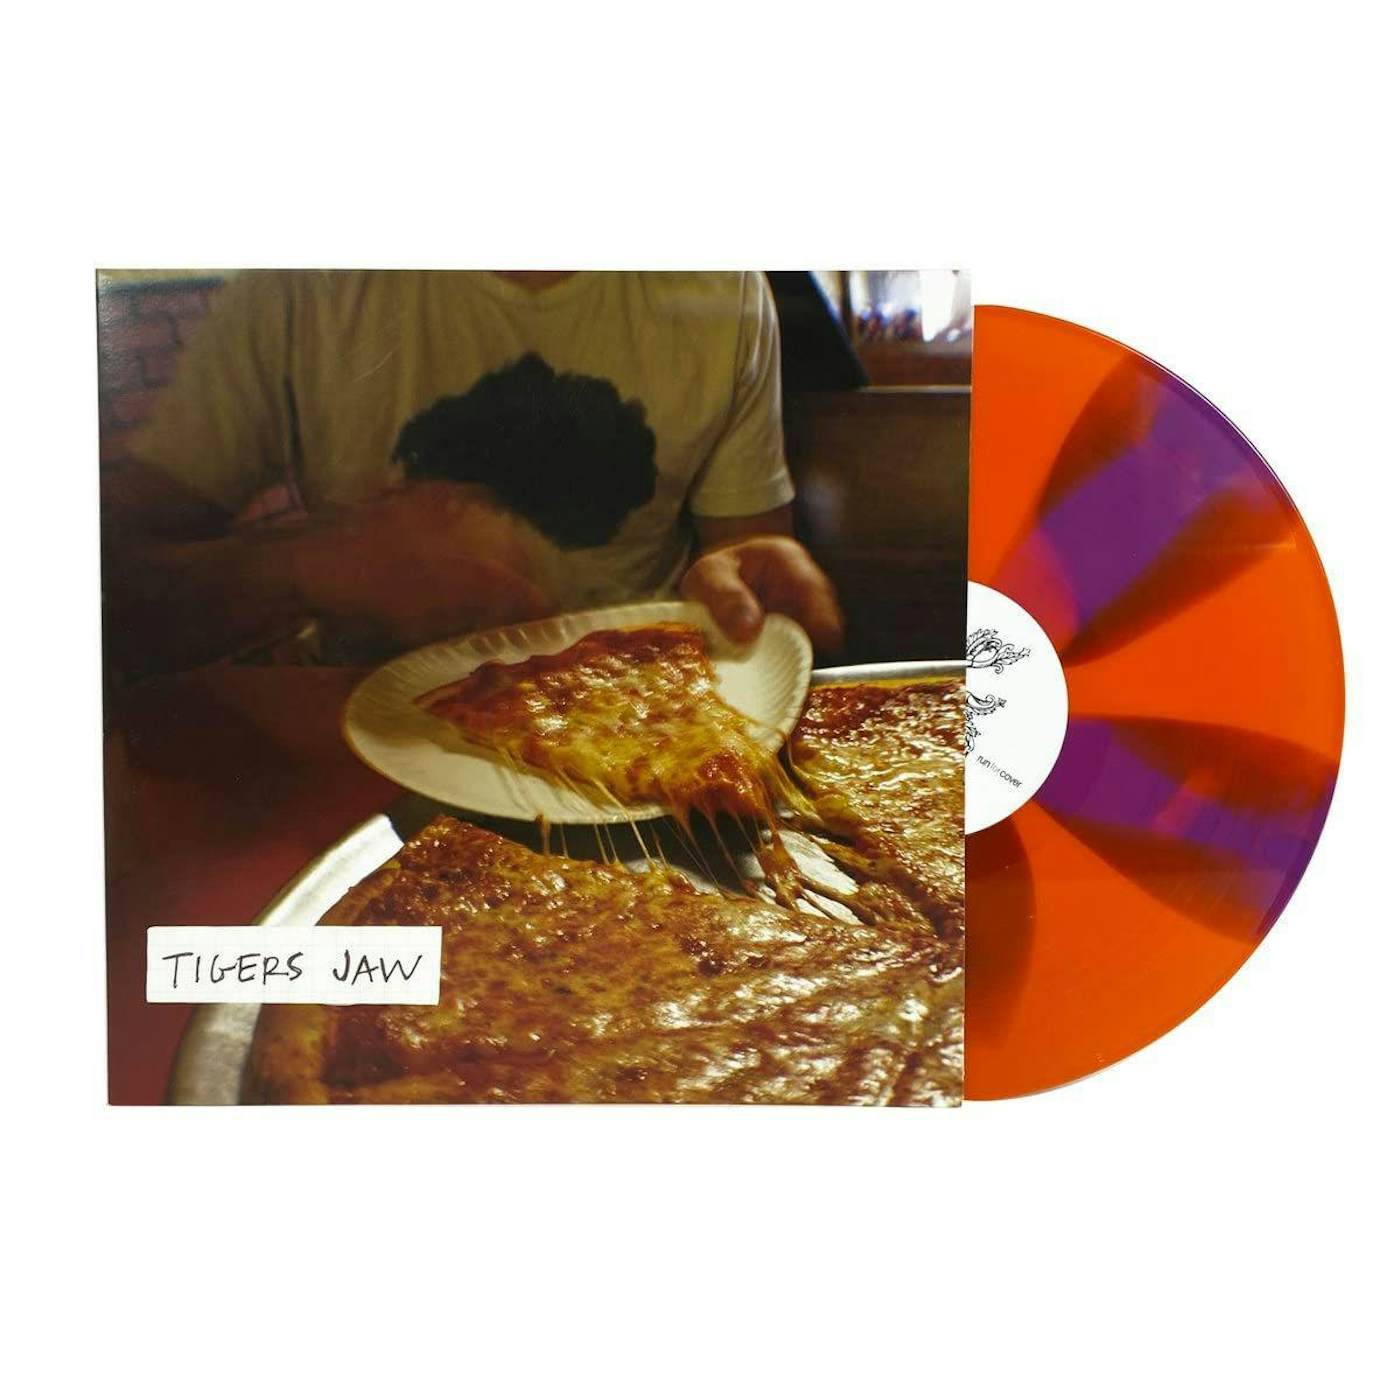 Tigers Jaw (Purple/Orange Pinwheel) Vinyl Record